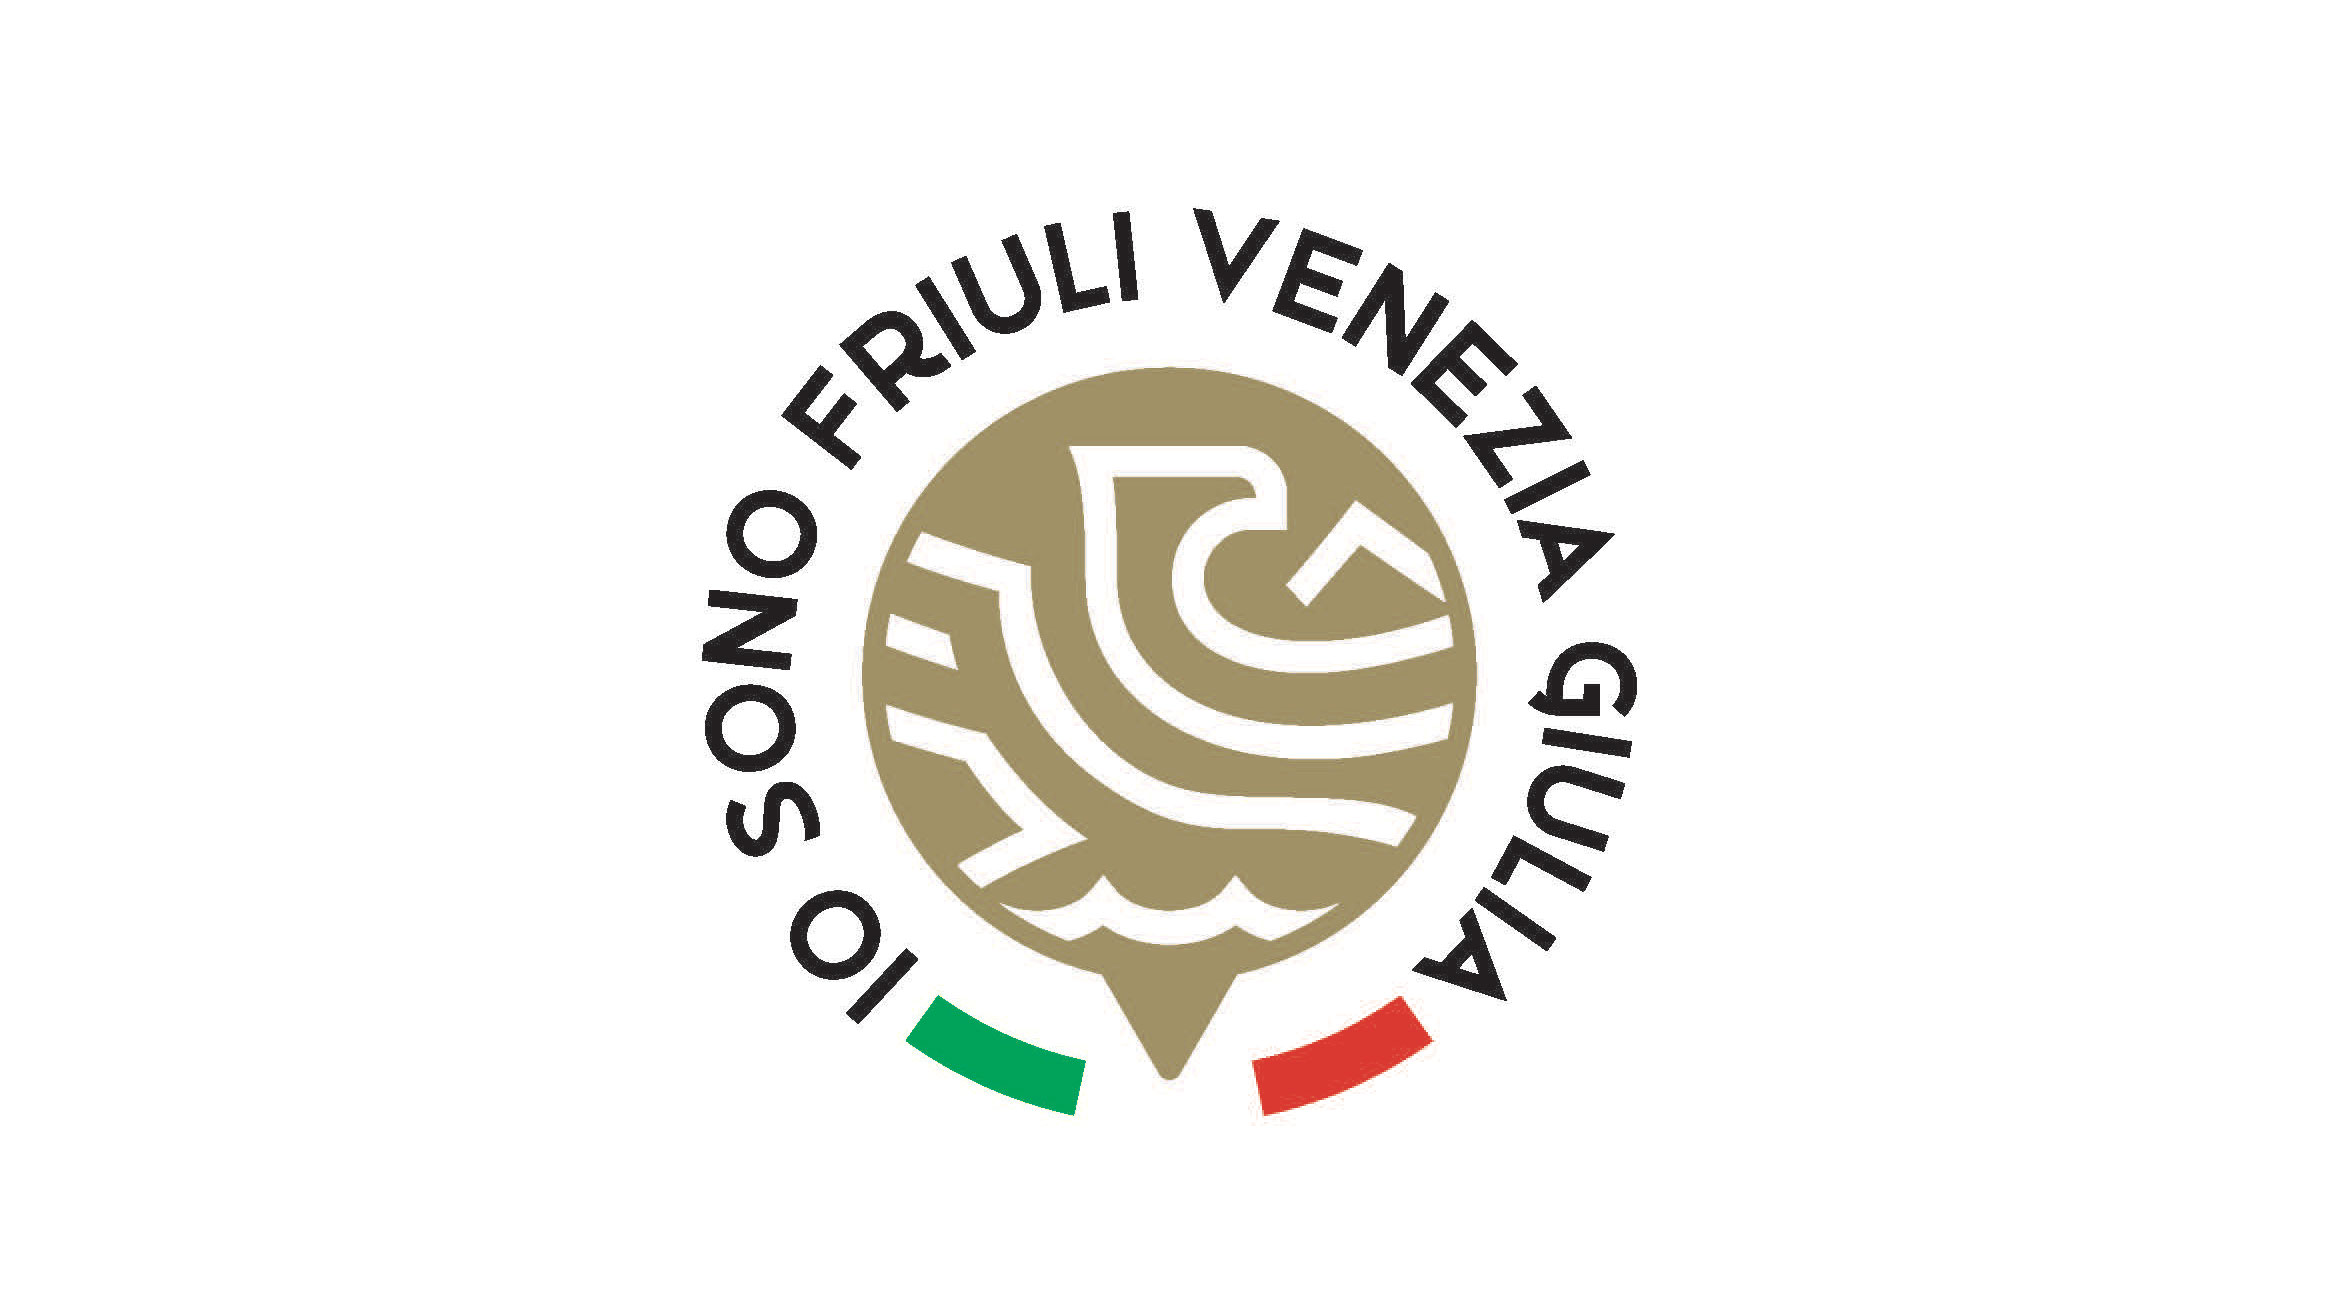 D’Osvaldo is “Io Sono Friuli Venezia Giulia”